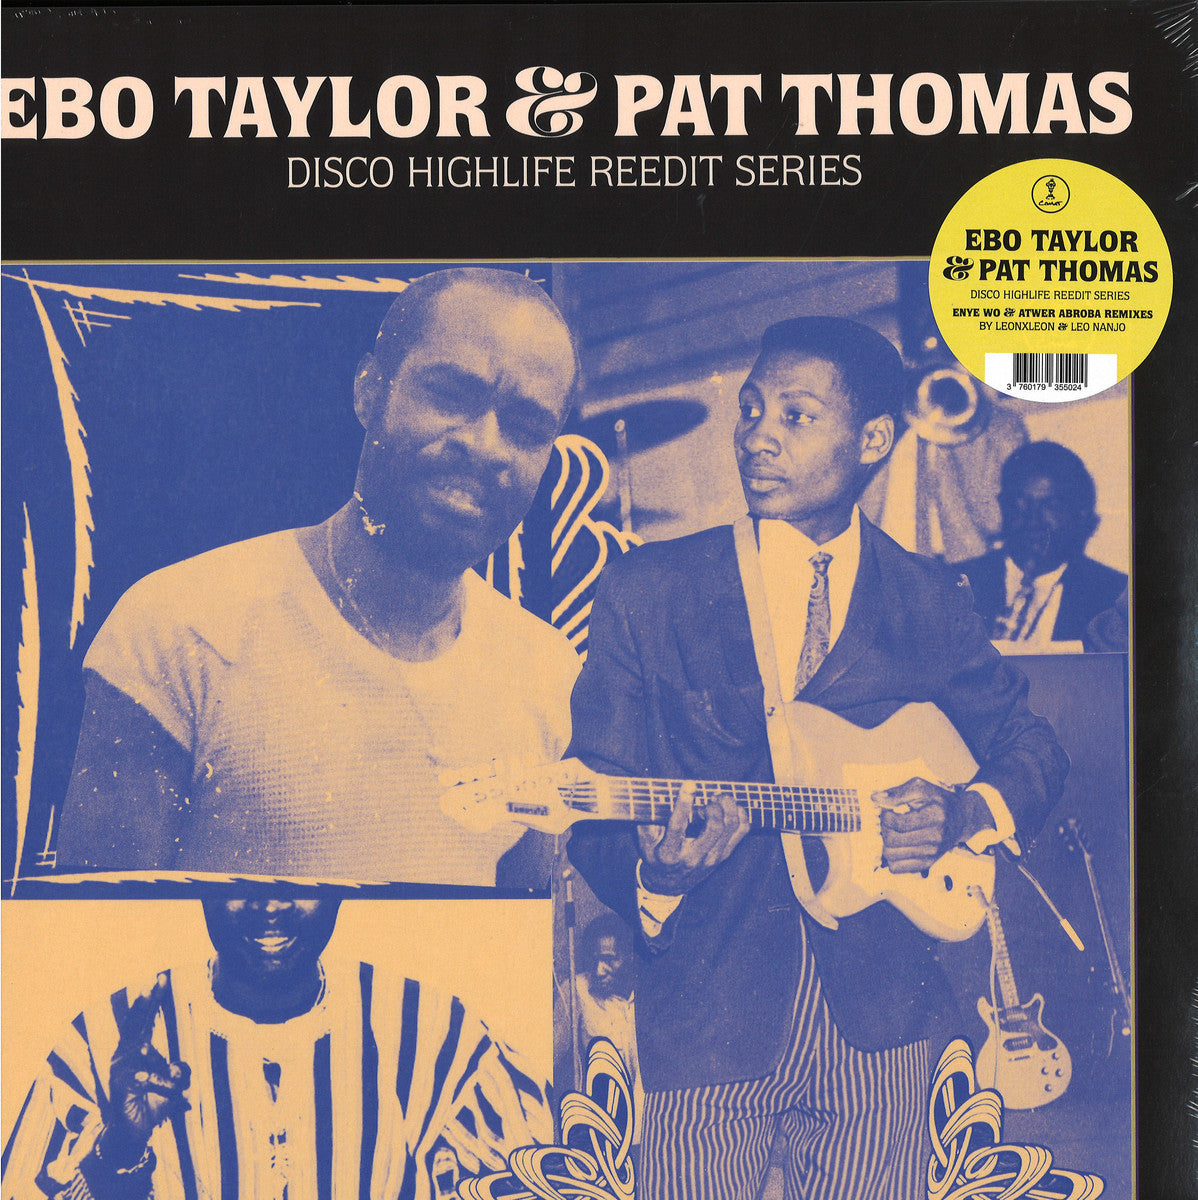 Ebo Taylor & Pat Thomas - Disco Highlife Reedit Series |
Comet Records (COMET087)